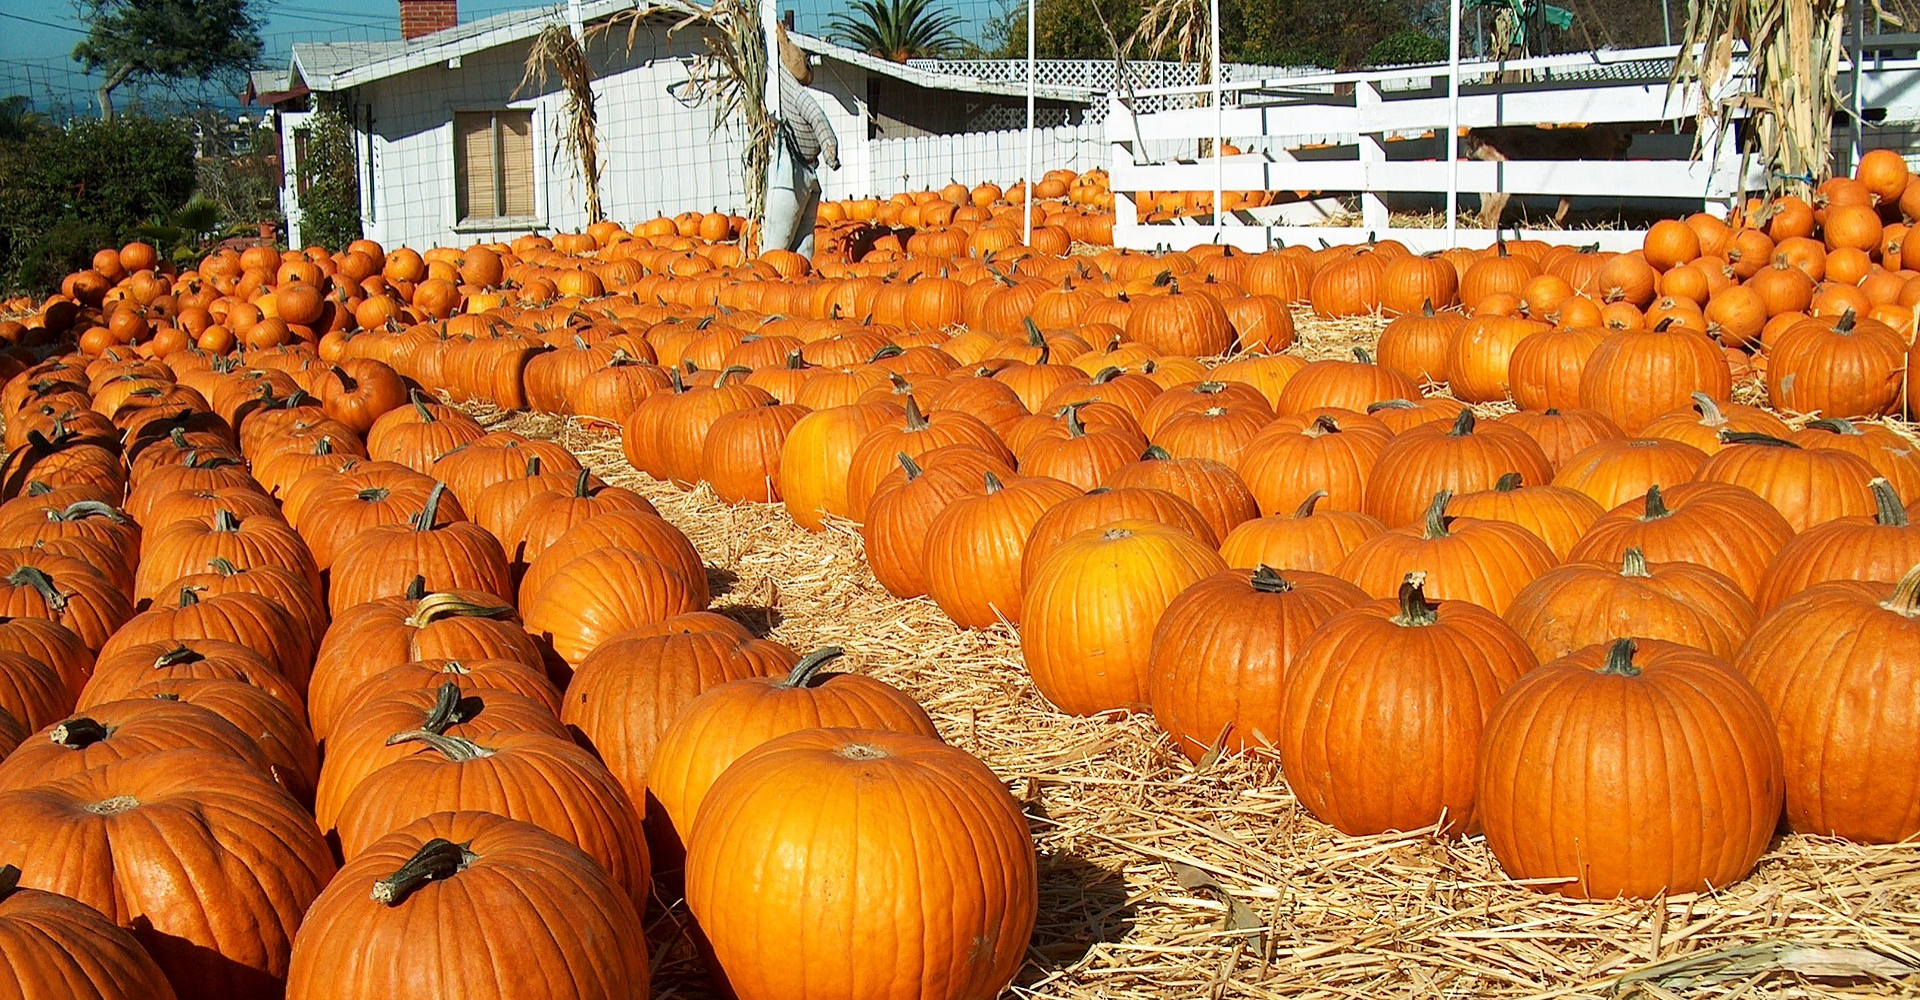 #3 Visit your local pumpkin patch.